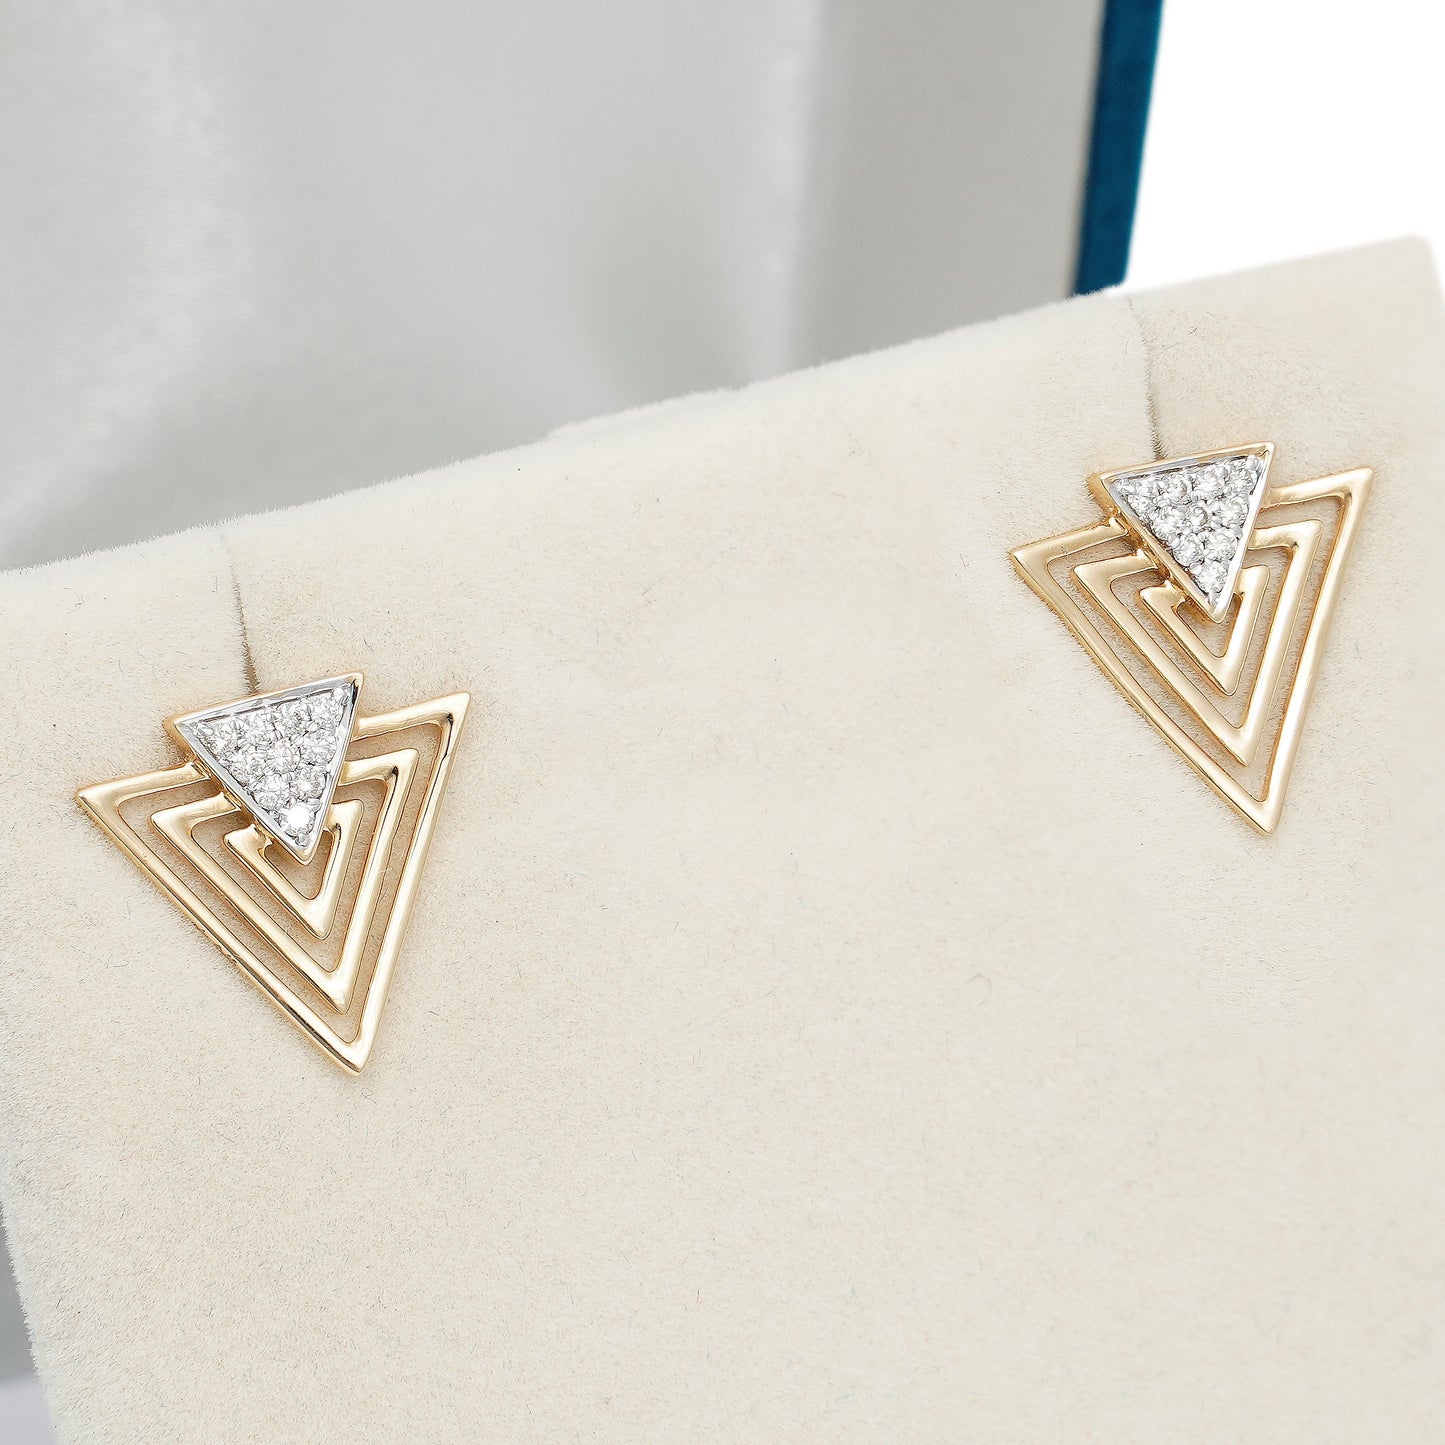 Tri-O-Metry Diamond Earring